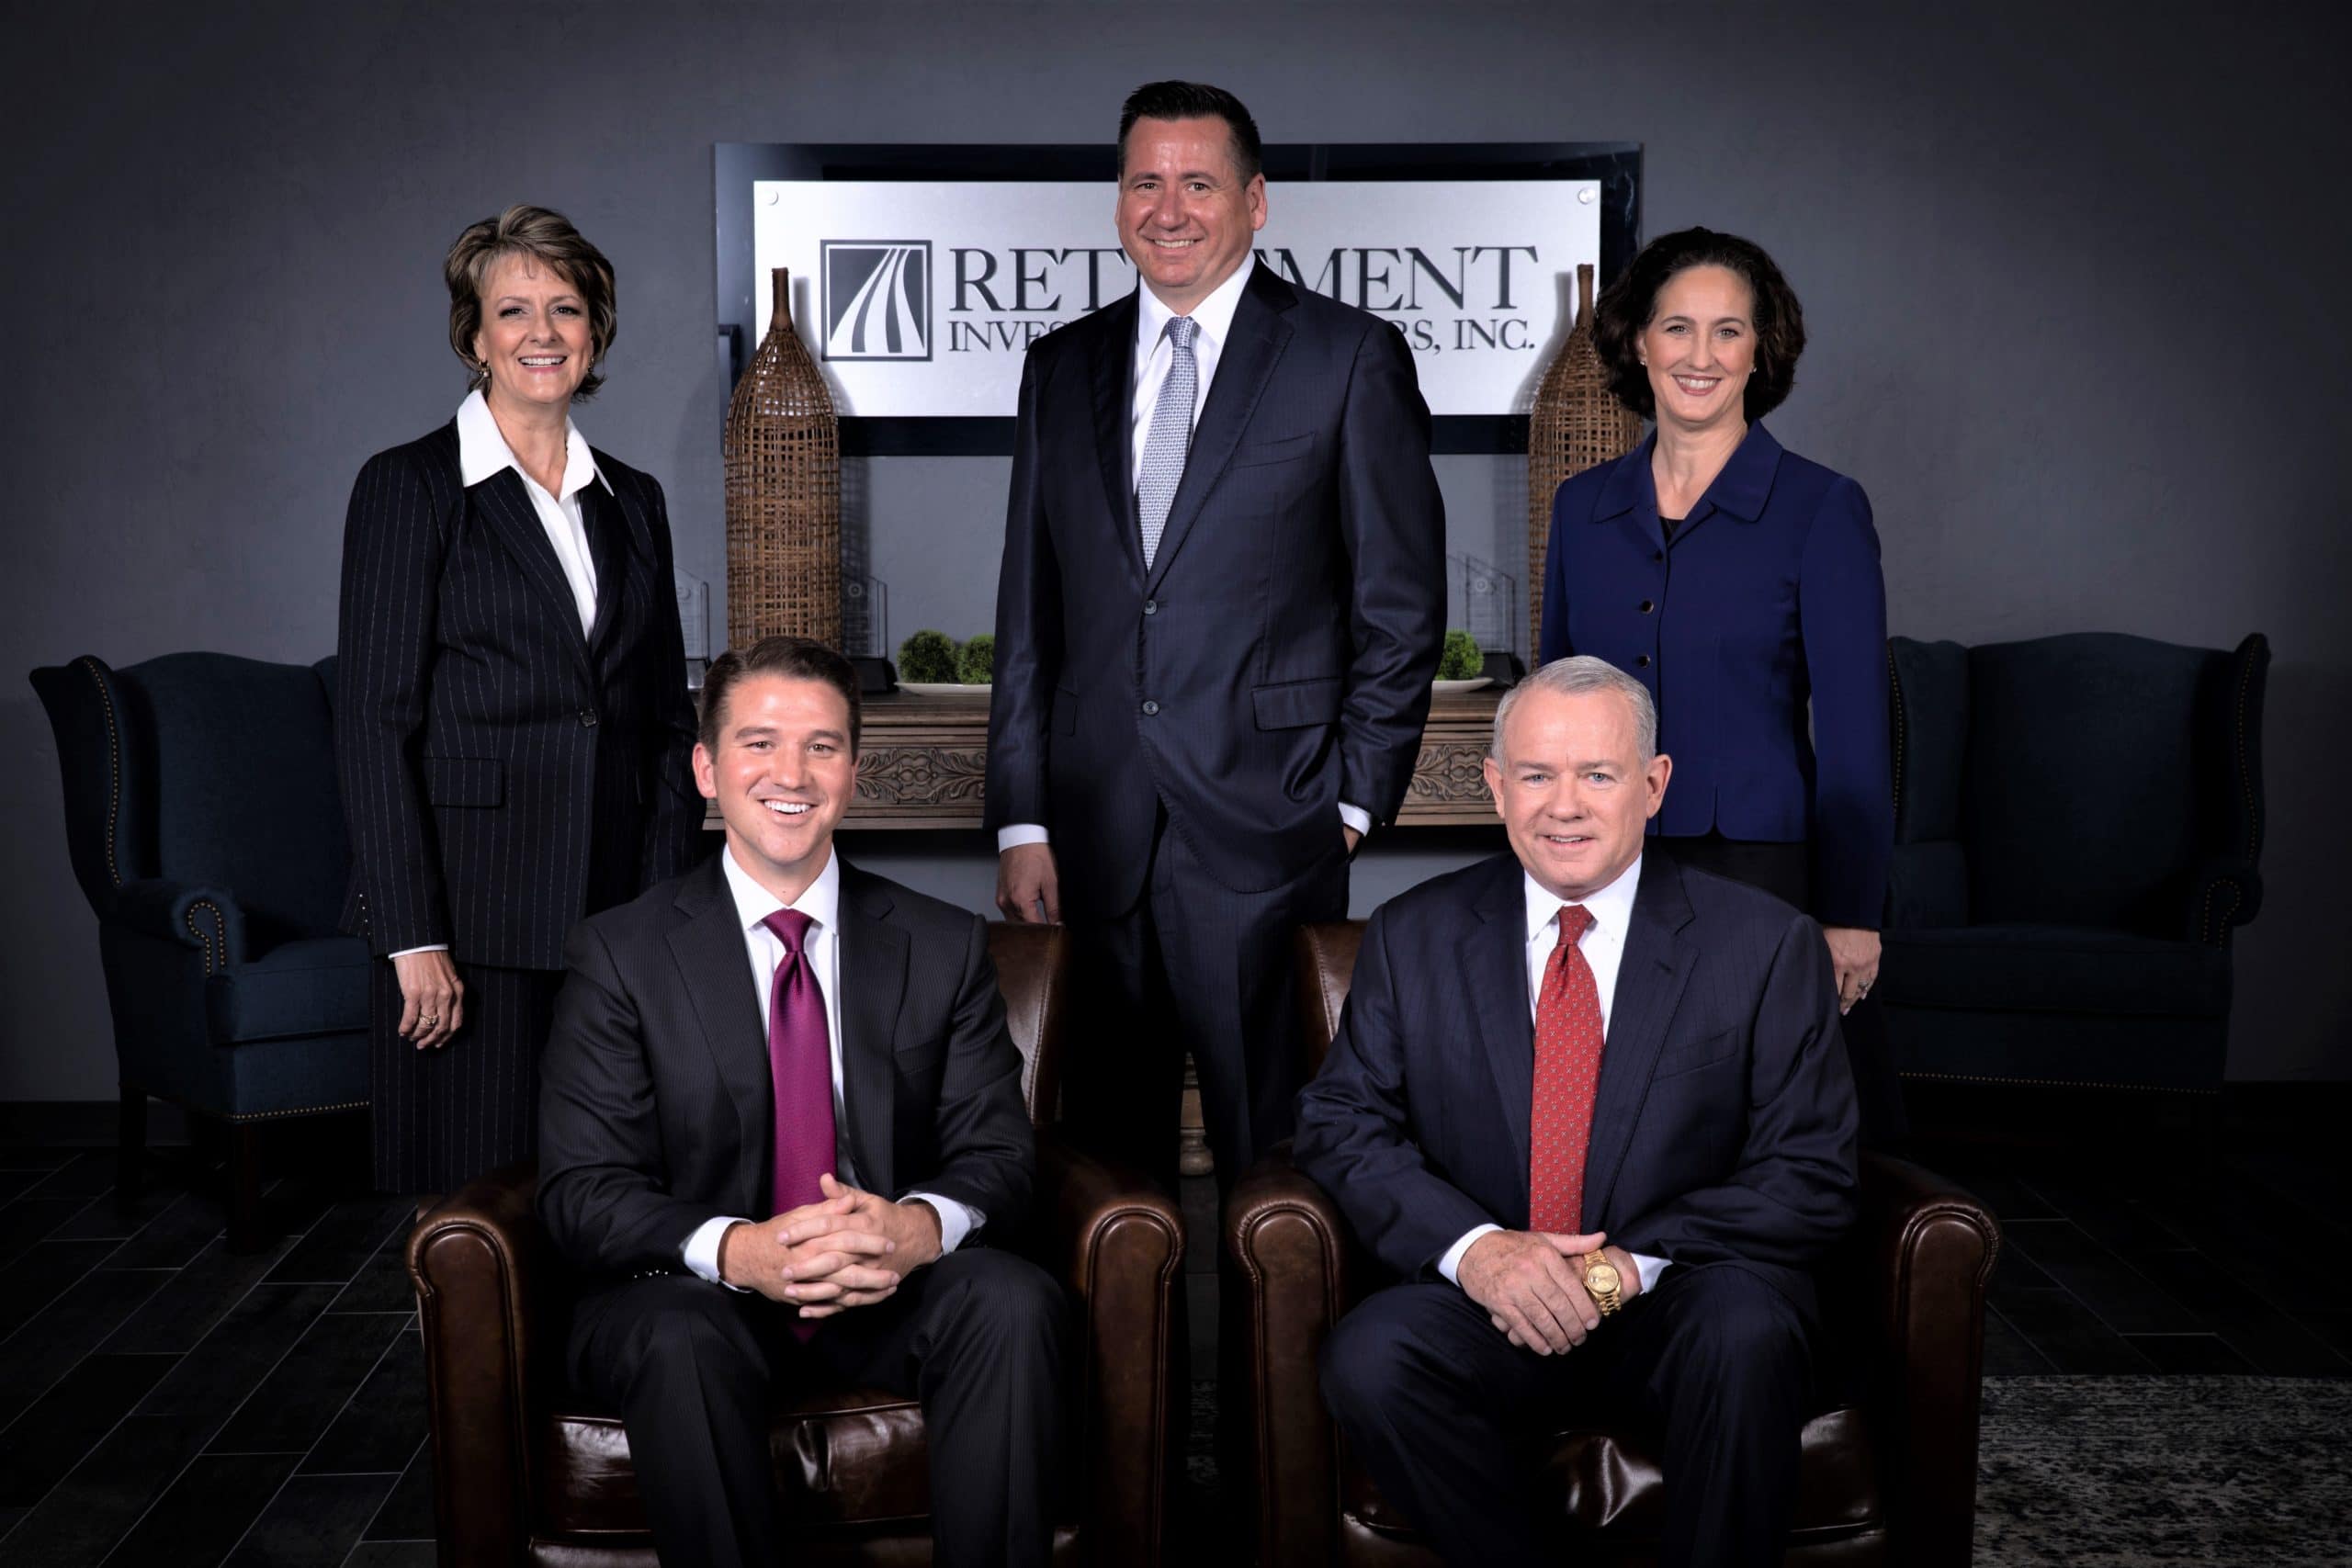 Retirement Investment Advisors, Inc.